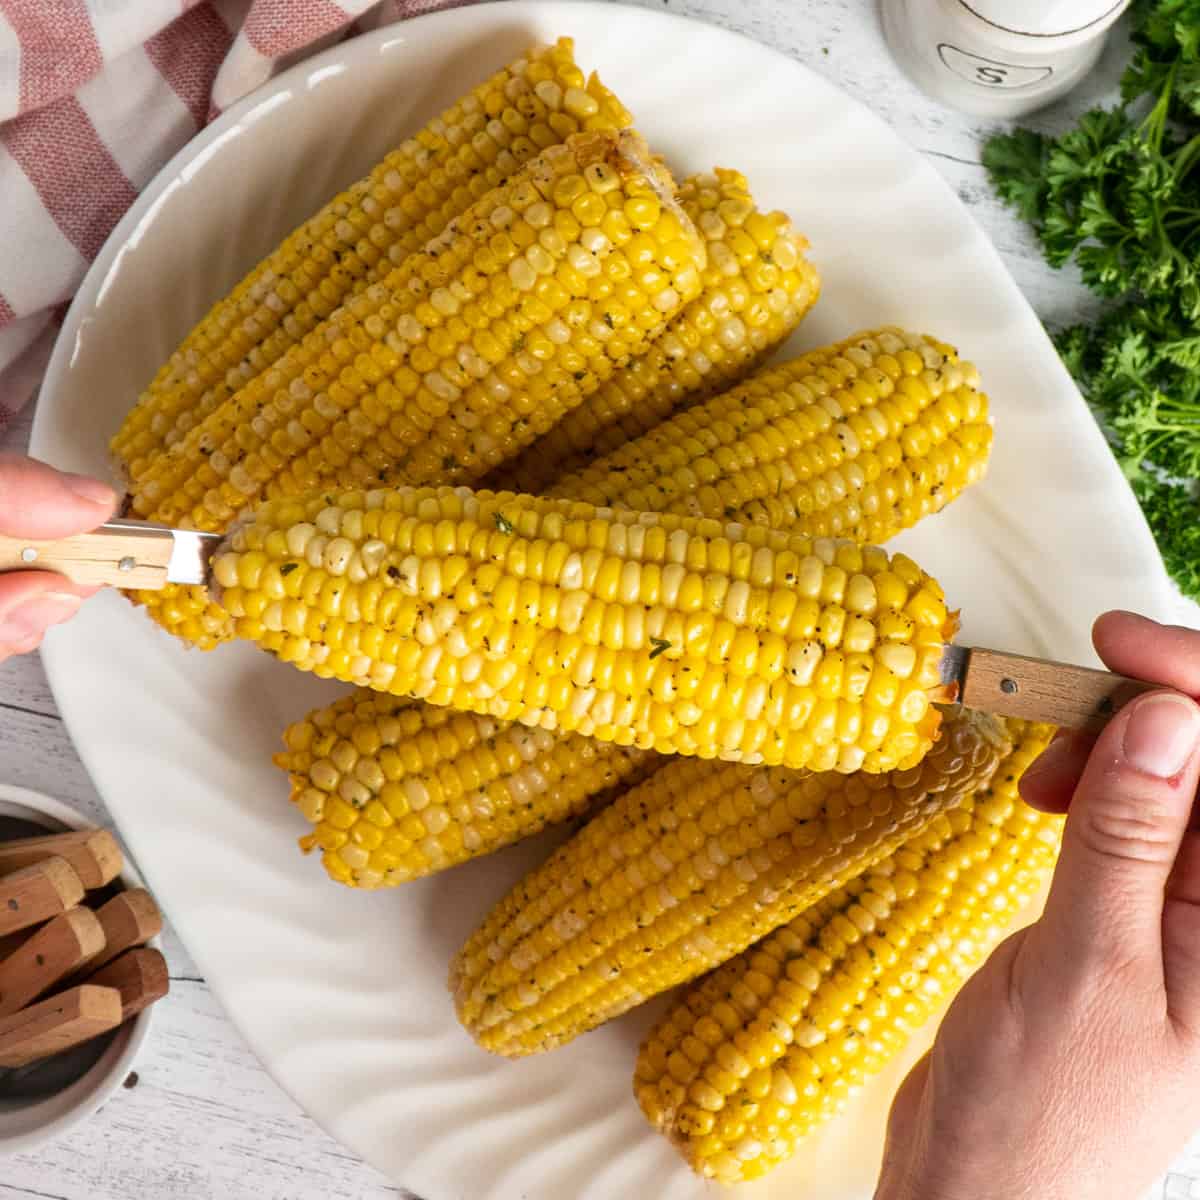 A plate full of crock pot corn on the cob.